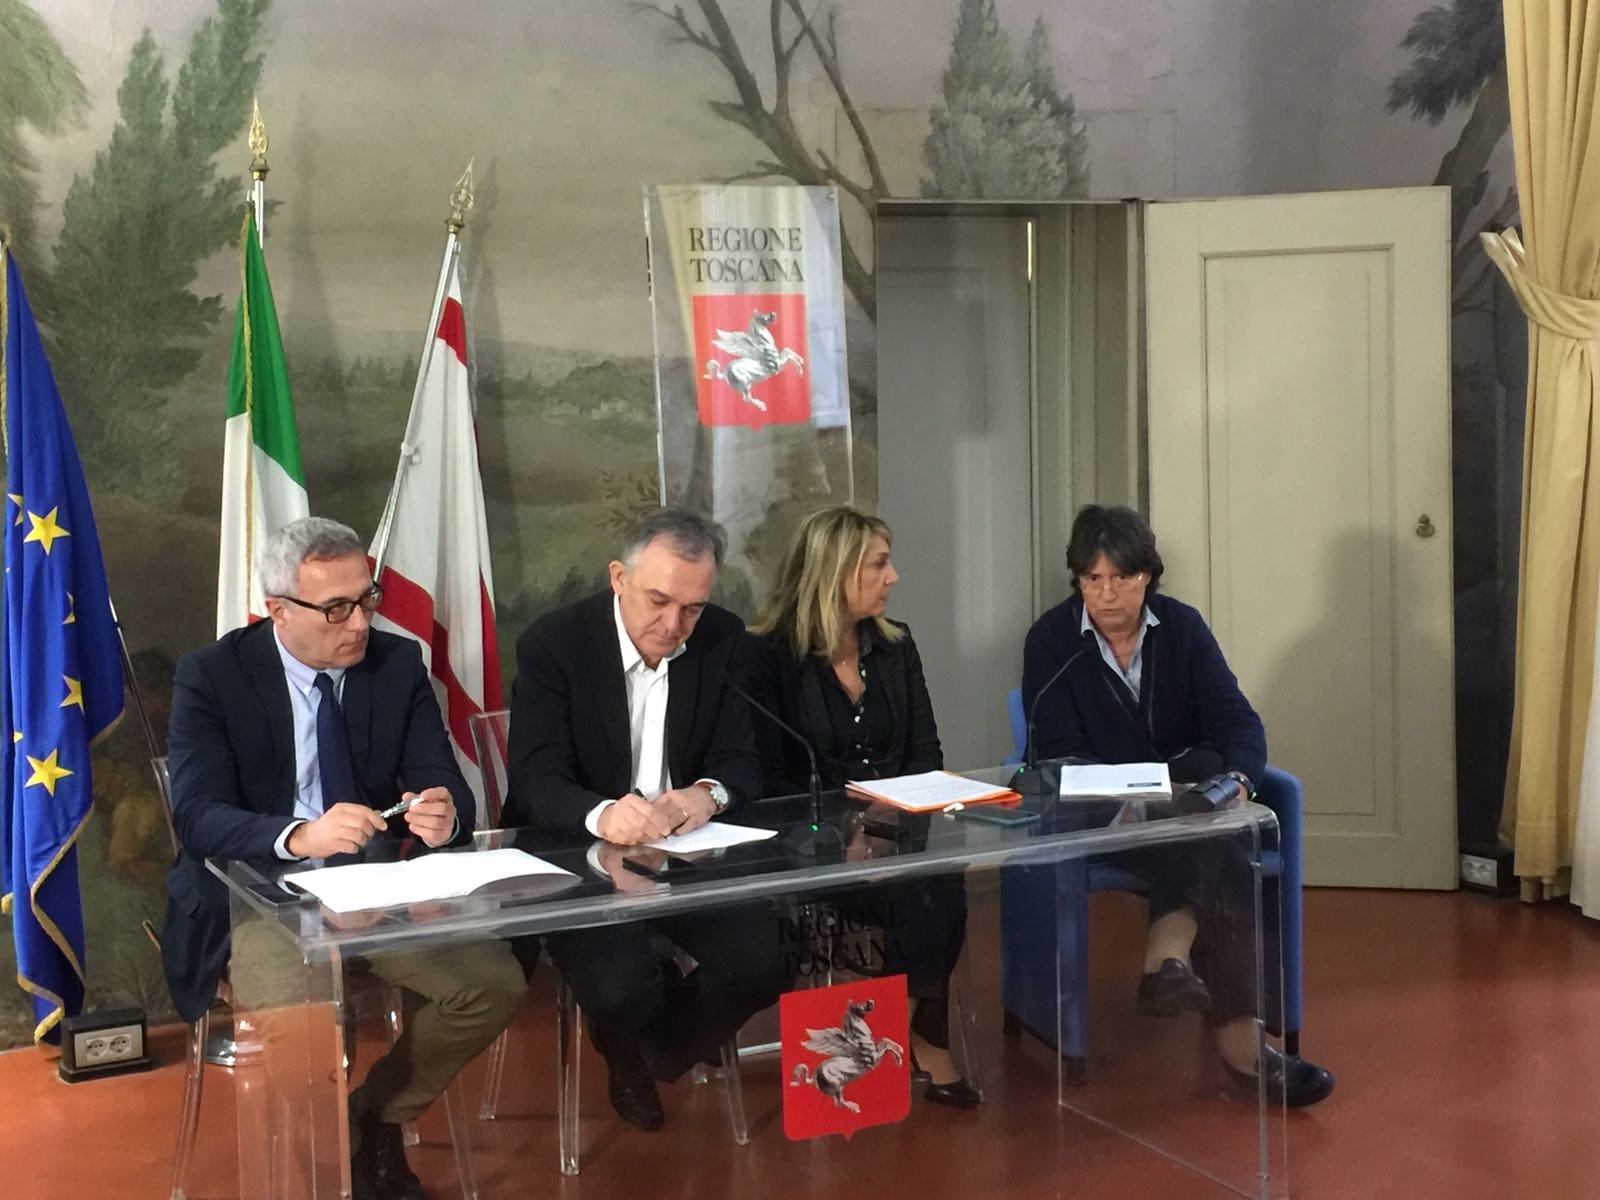 Epatite C: eliminare il virus in Toscana entro 2020